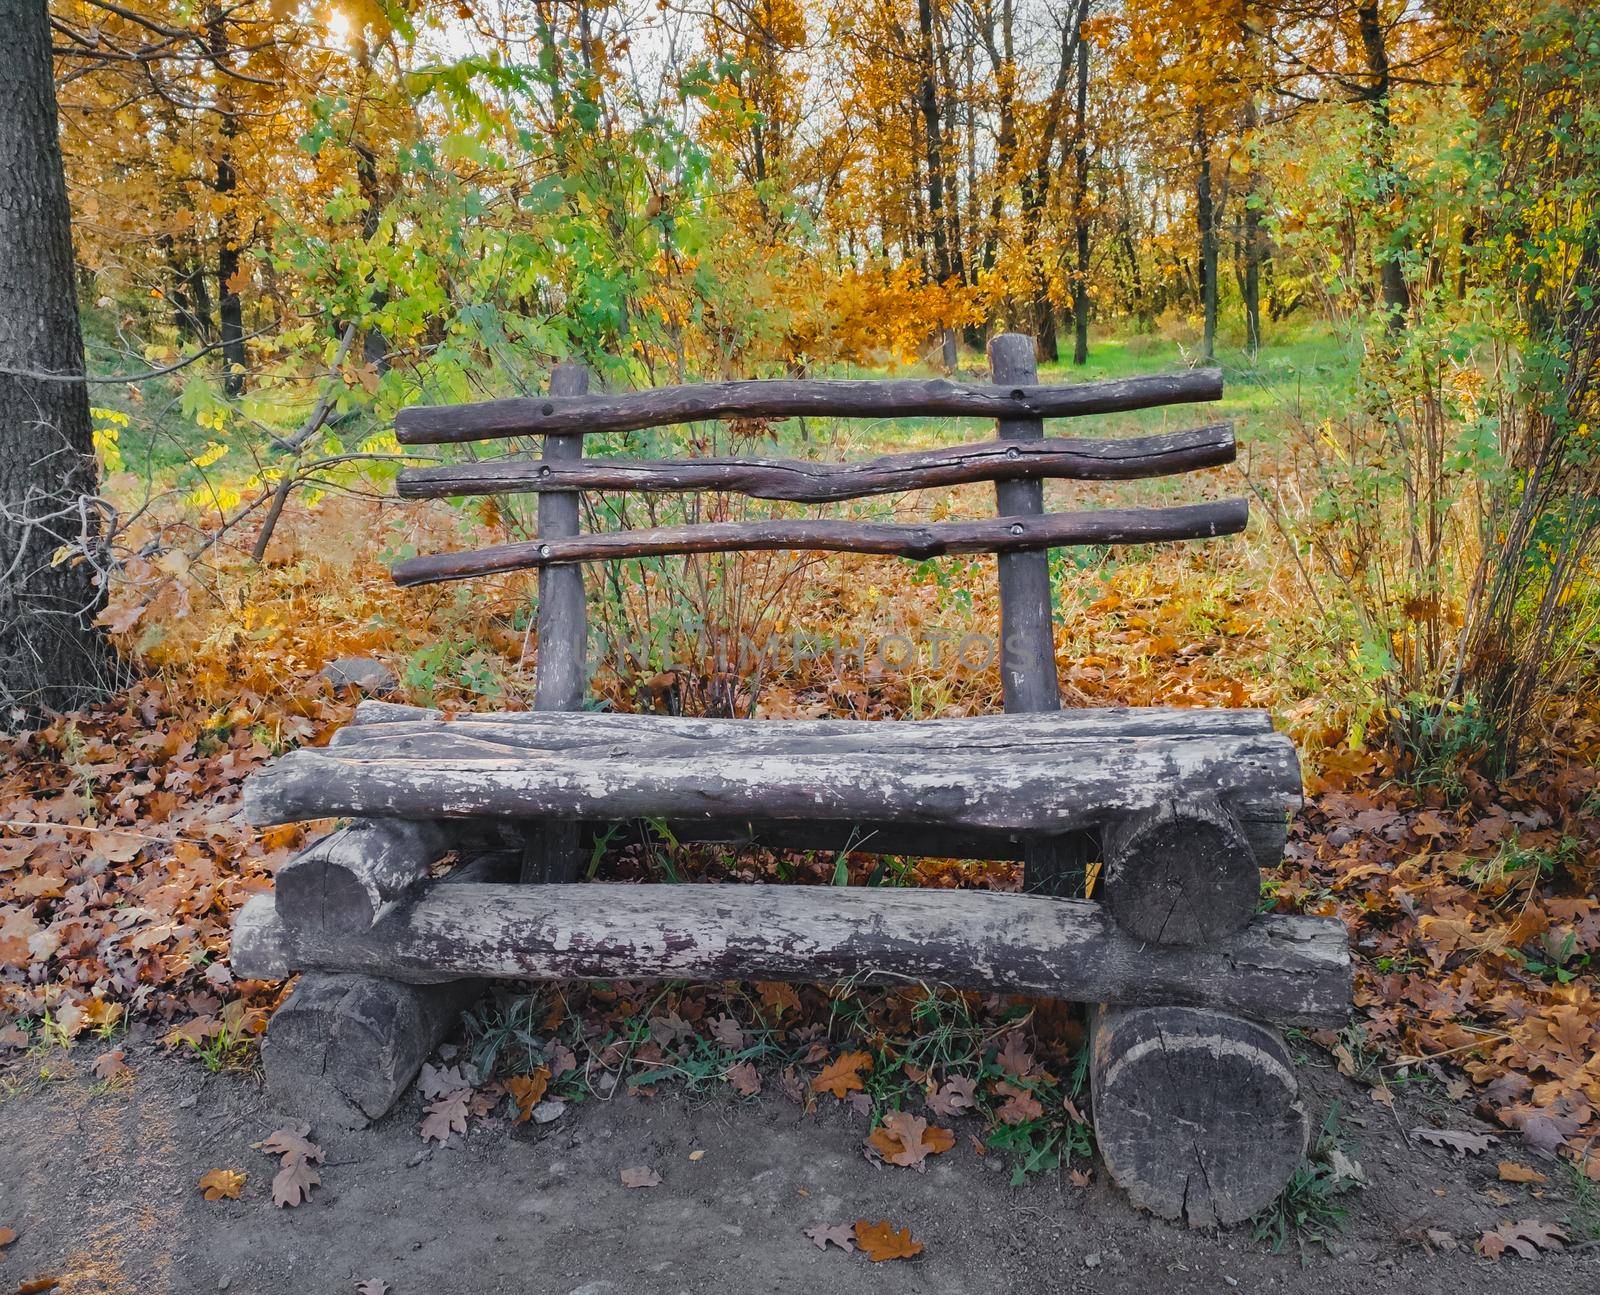 Forest wooden bench scene. Wooden bench in deep forest. Wooden bench in forest. bench in autumn park. empty bench in park